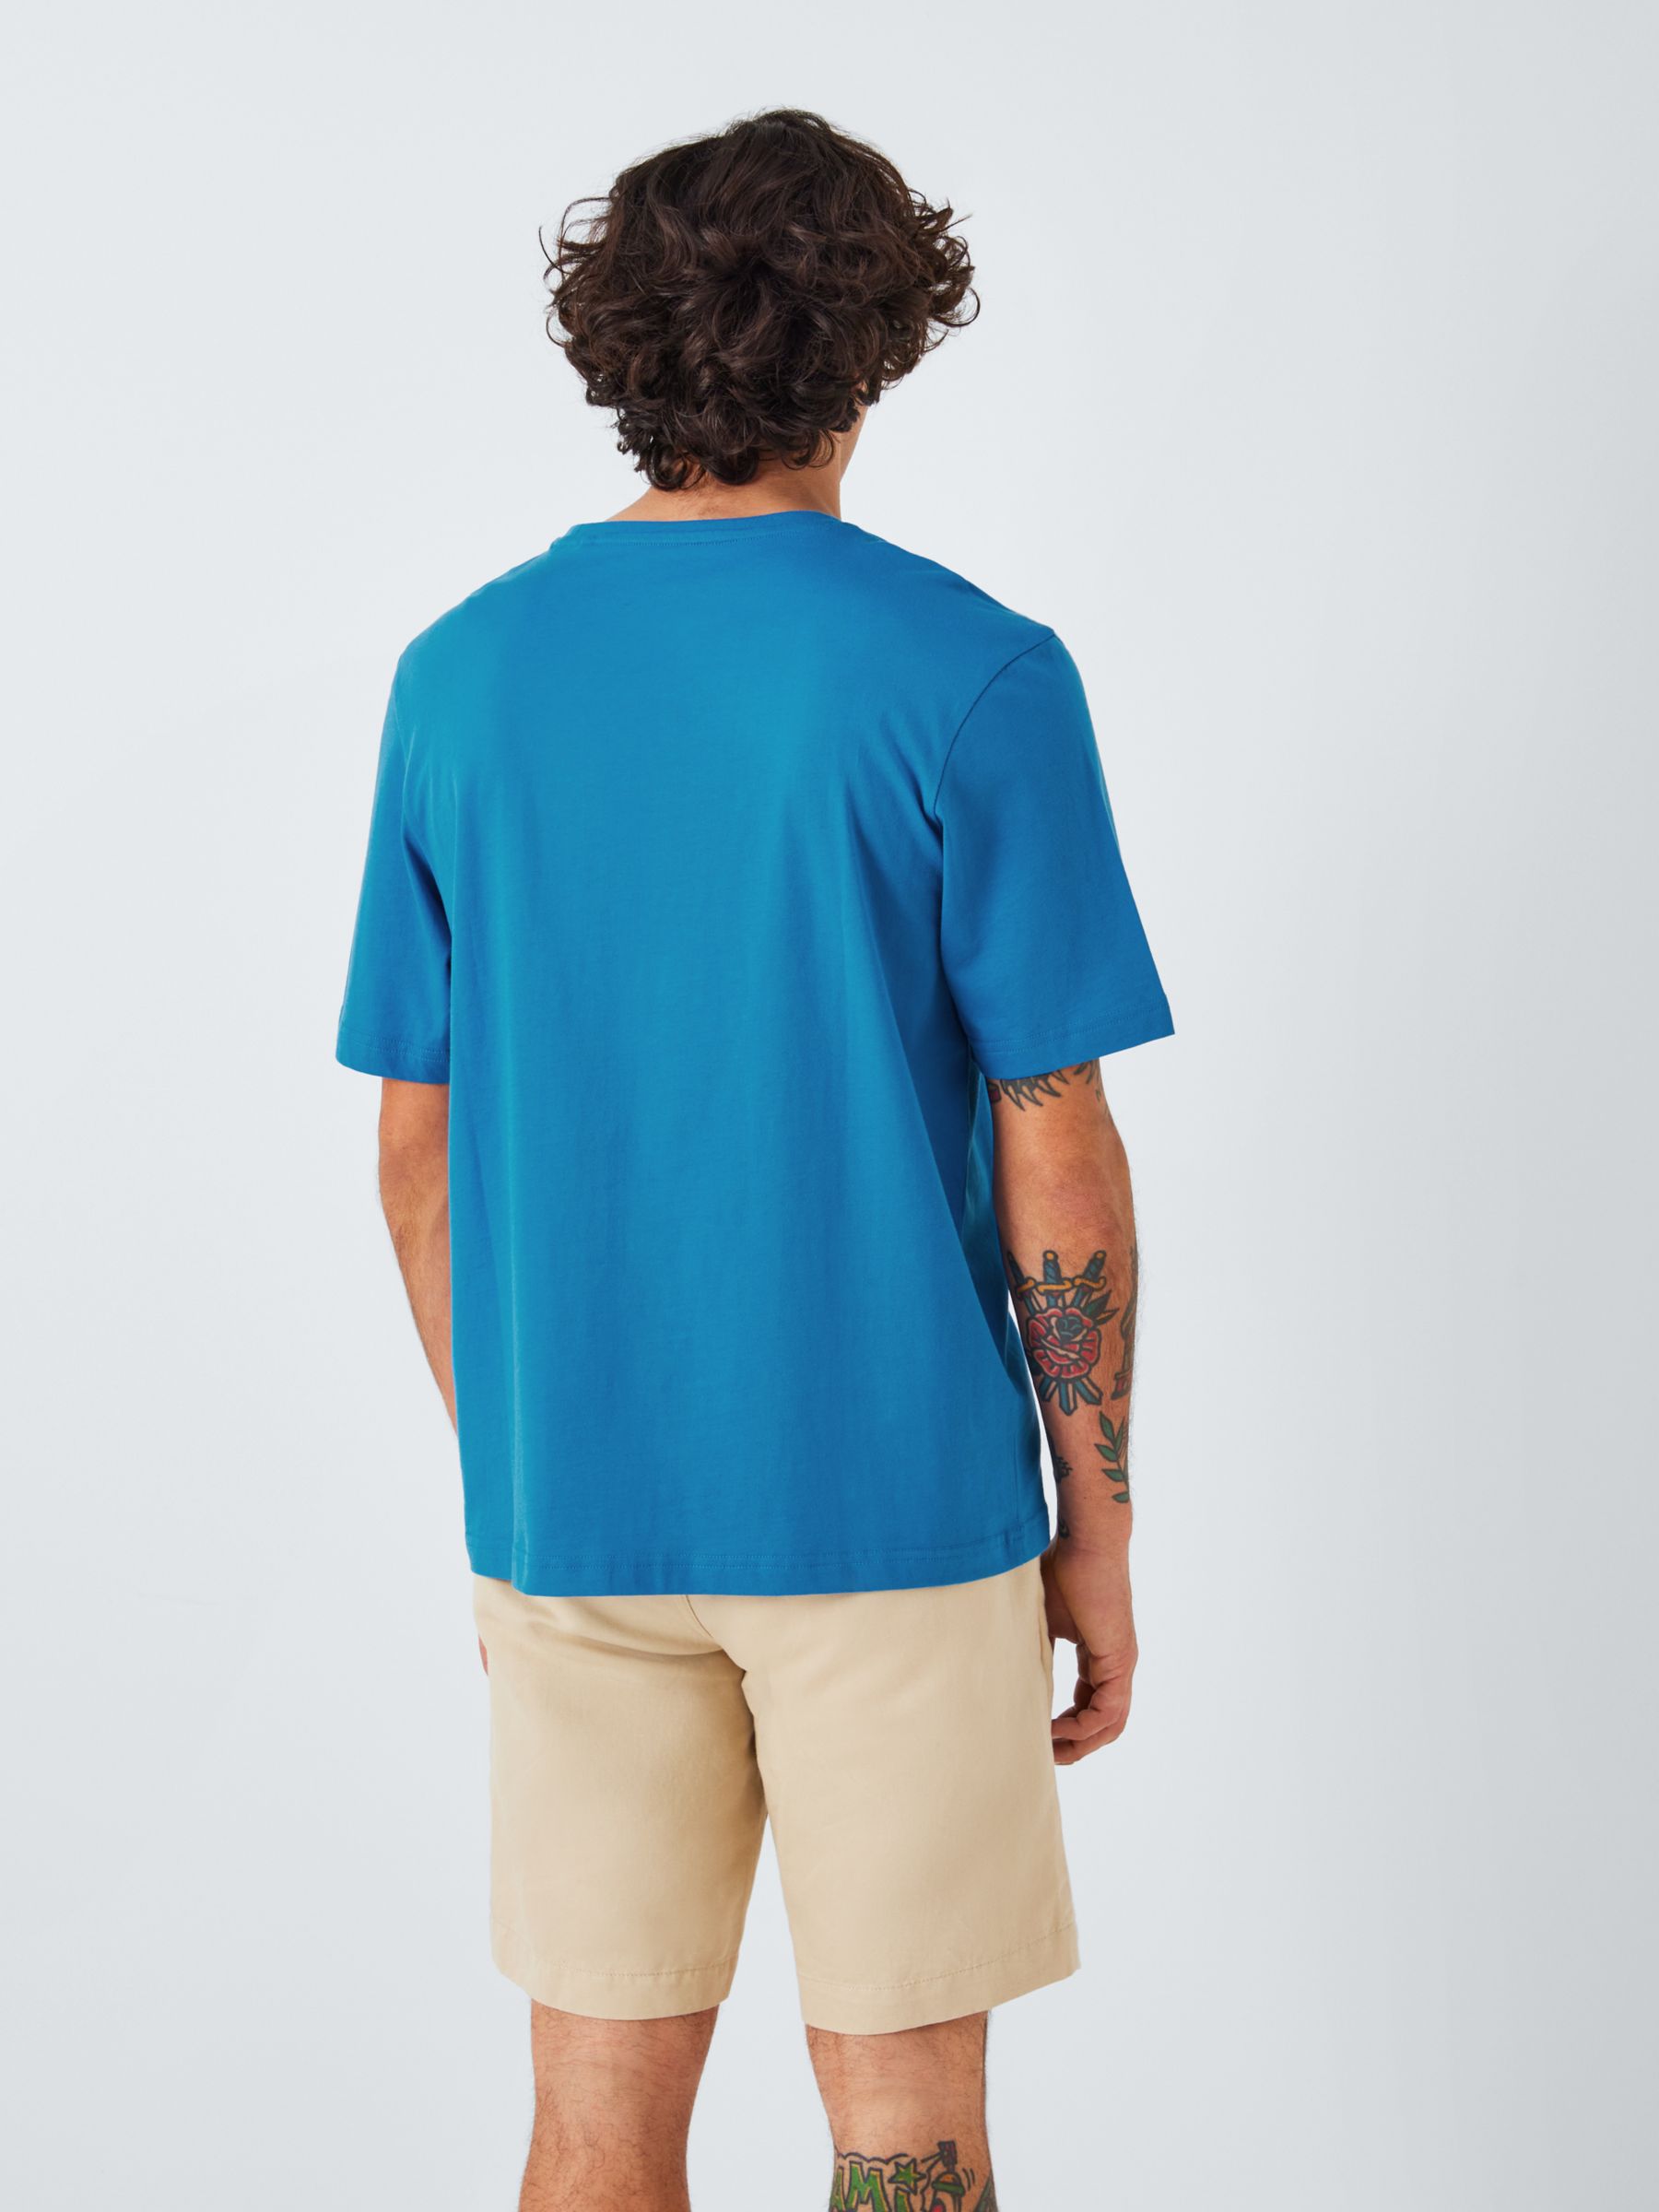 Buy John Lewis Short Sleeve Crew Neck T-Shirt Online at johnlewis.com